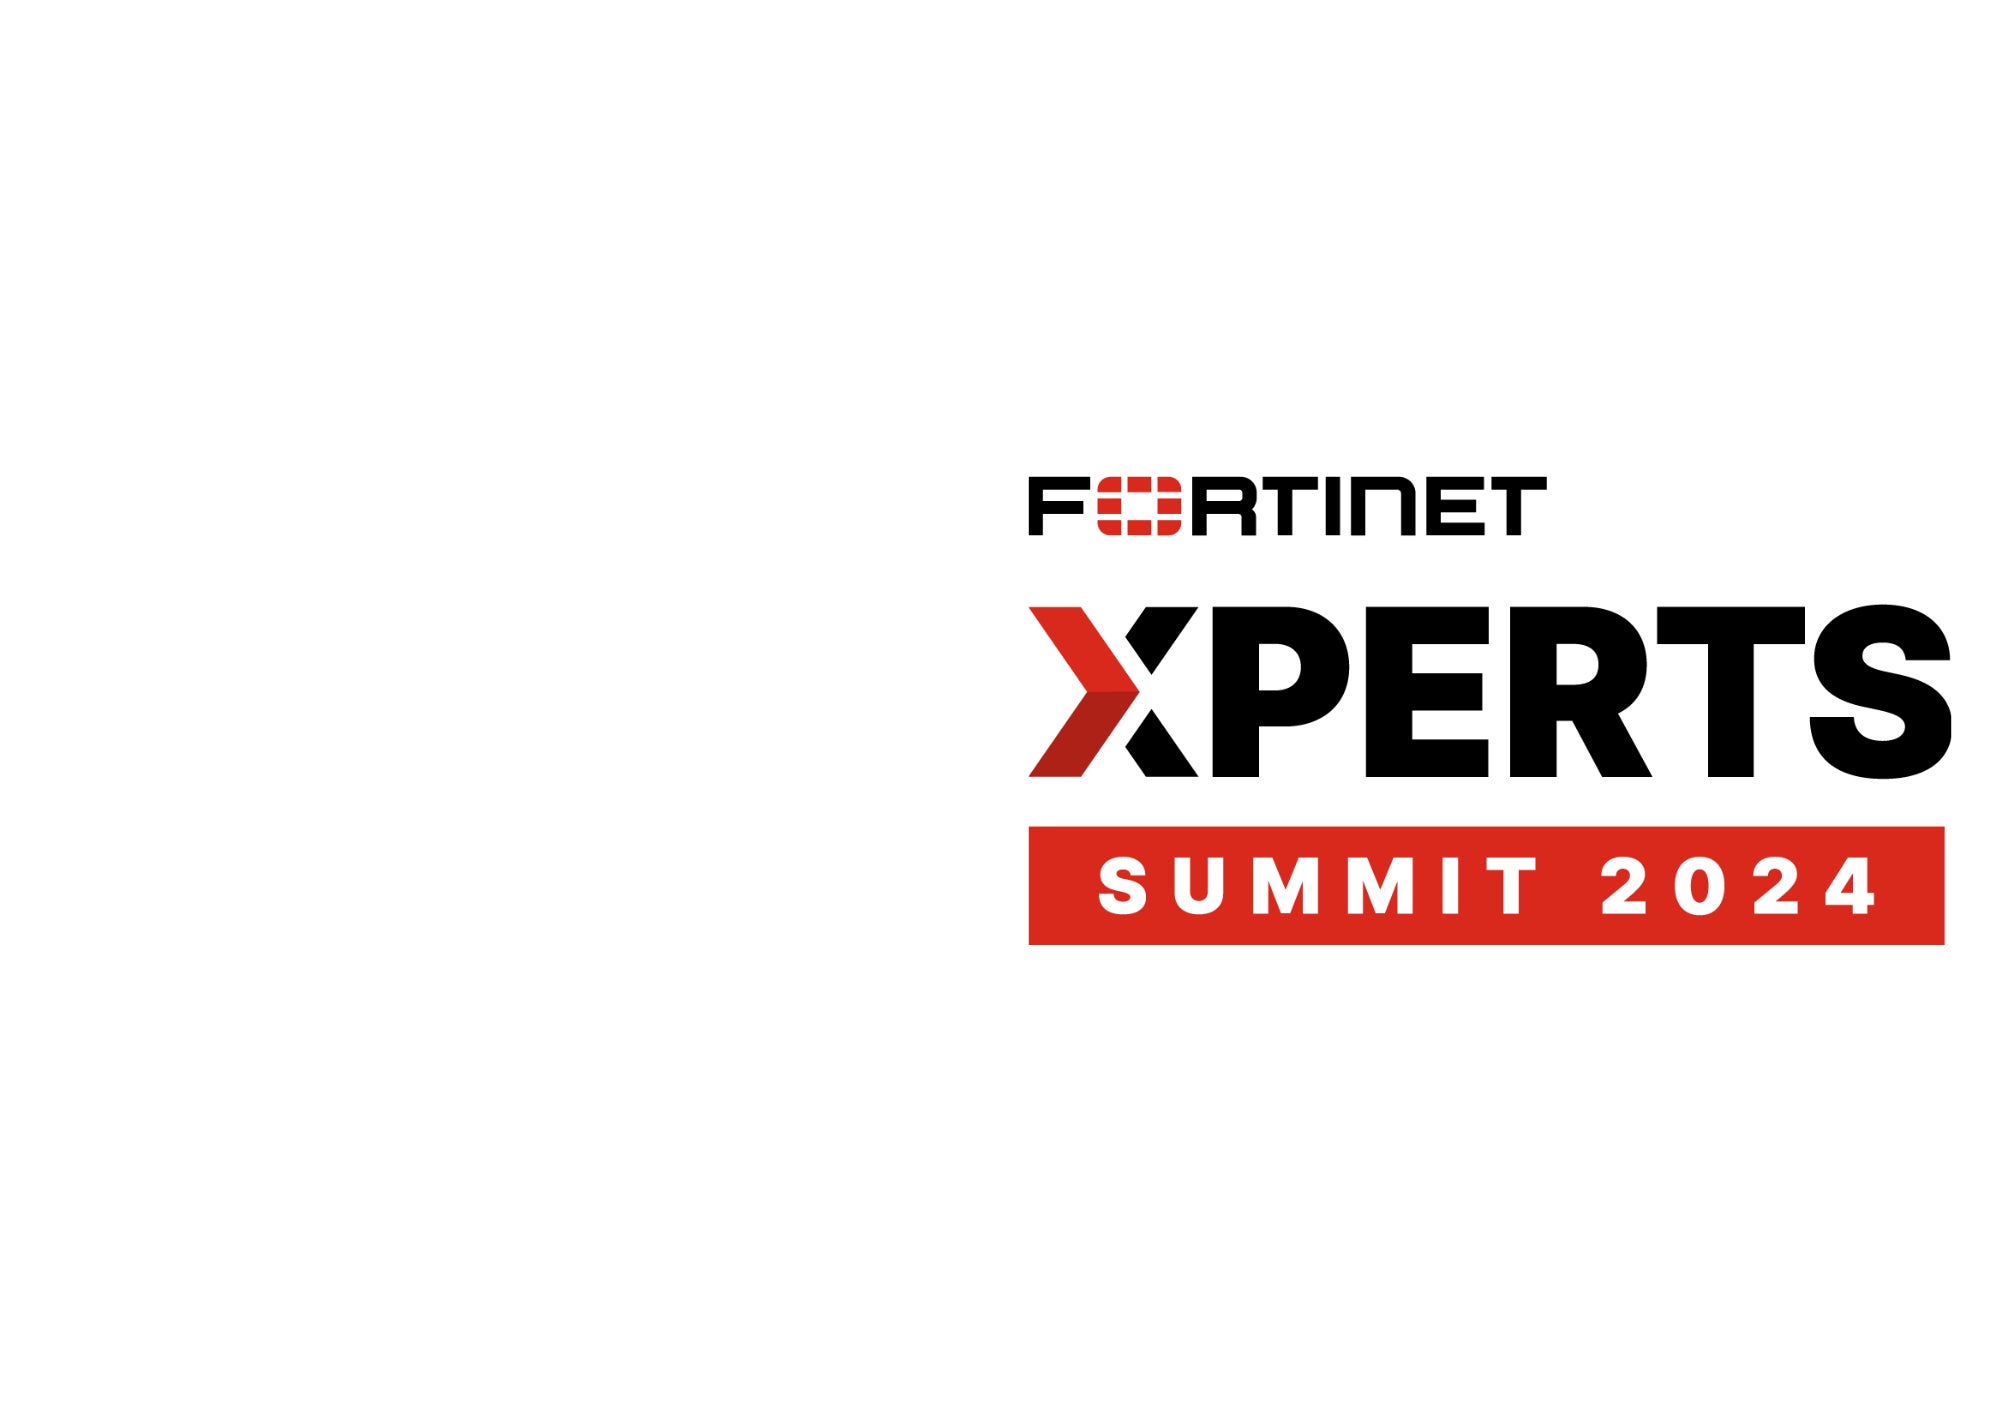 Fortinet Xperts Summit